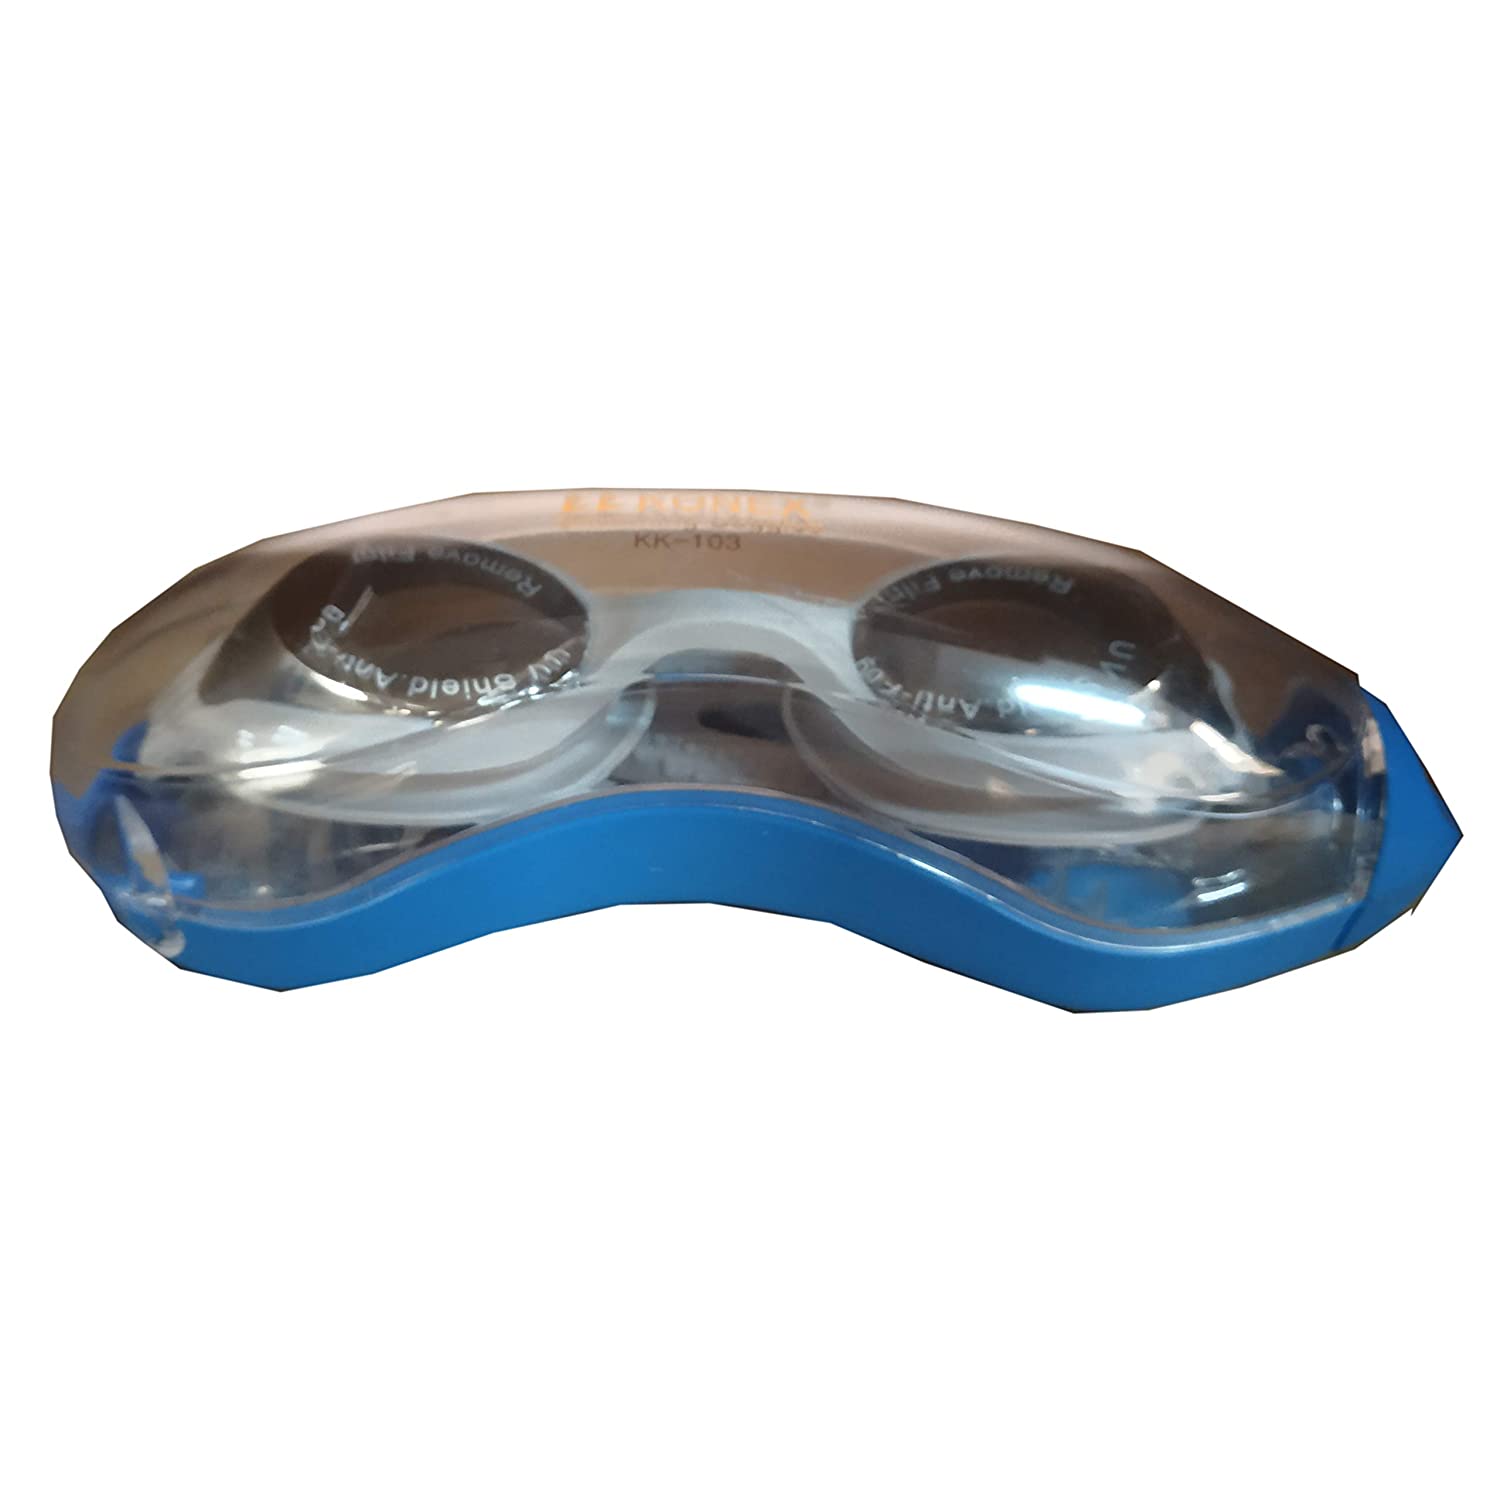 Konex KK-103 Kids Swimming Goggle, Grey - Best Price online Prokicksports.com